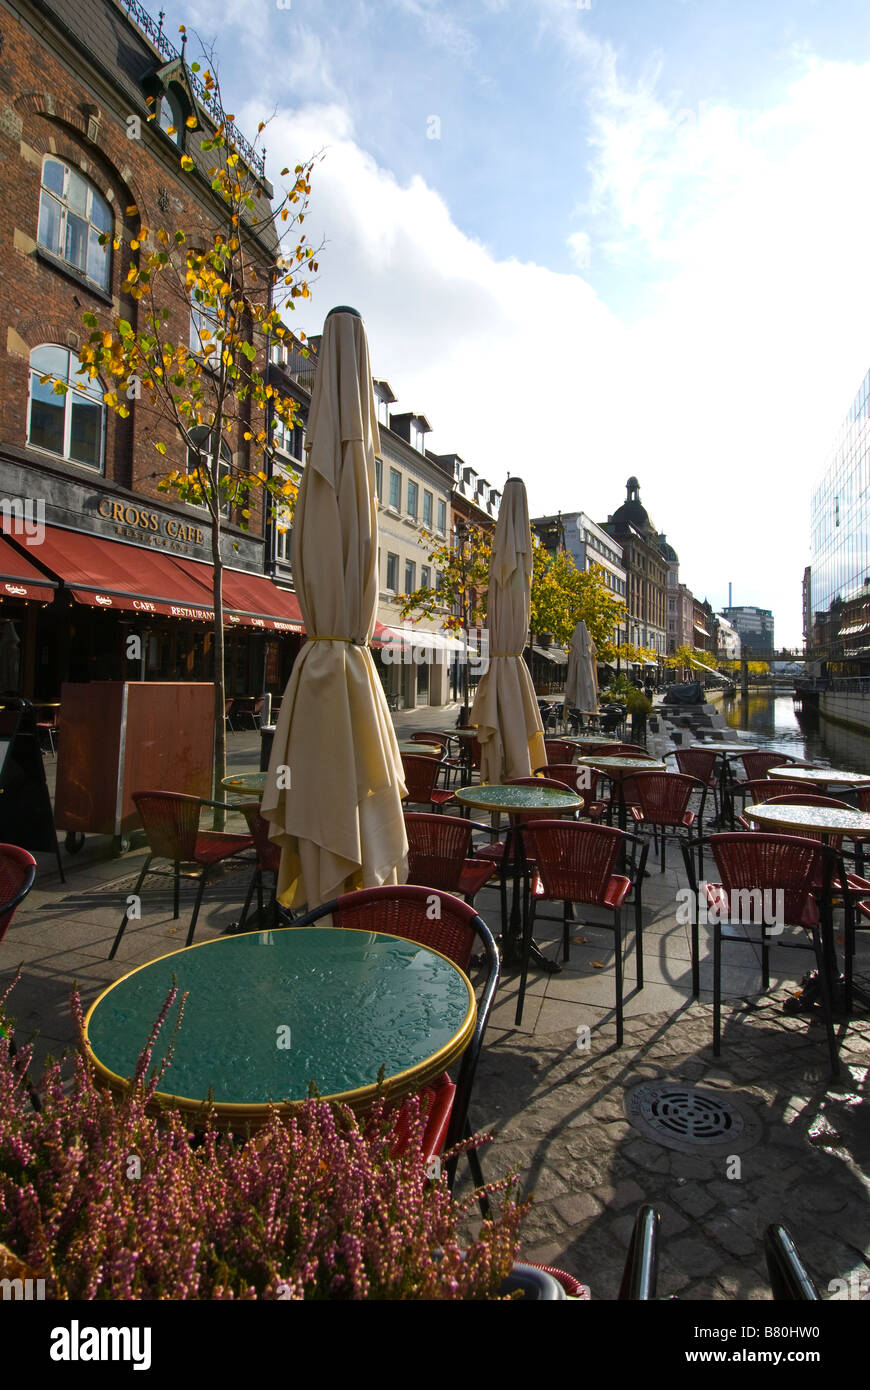 A pavement cafe on Aboulevarden, Arhus, Denmark. Stock Photo